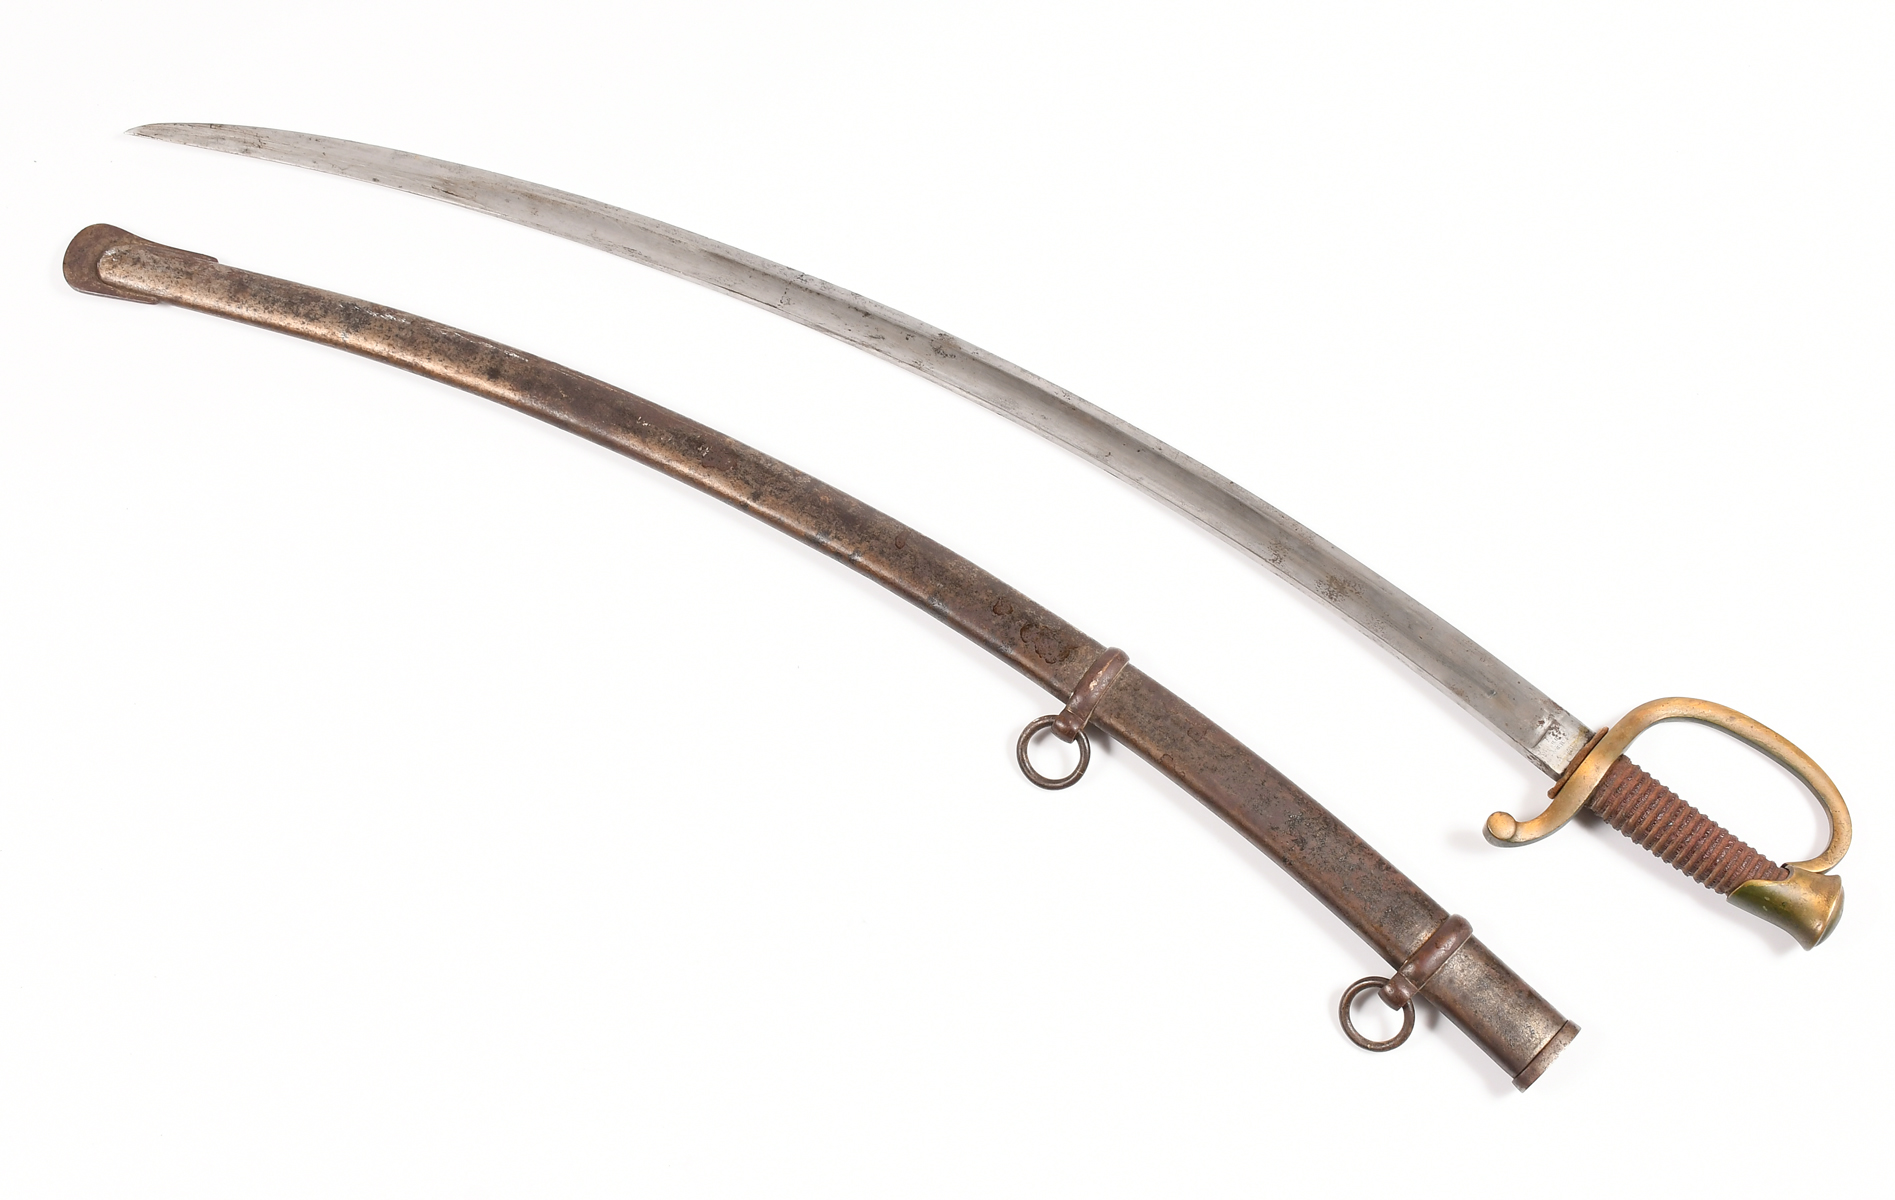 AMES MODEL 1850 ARTILLERY SWORD: With